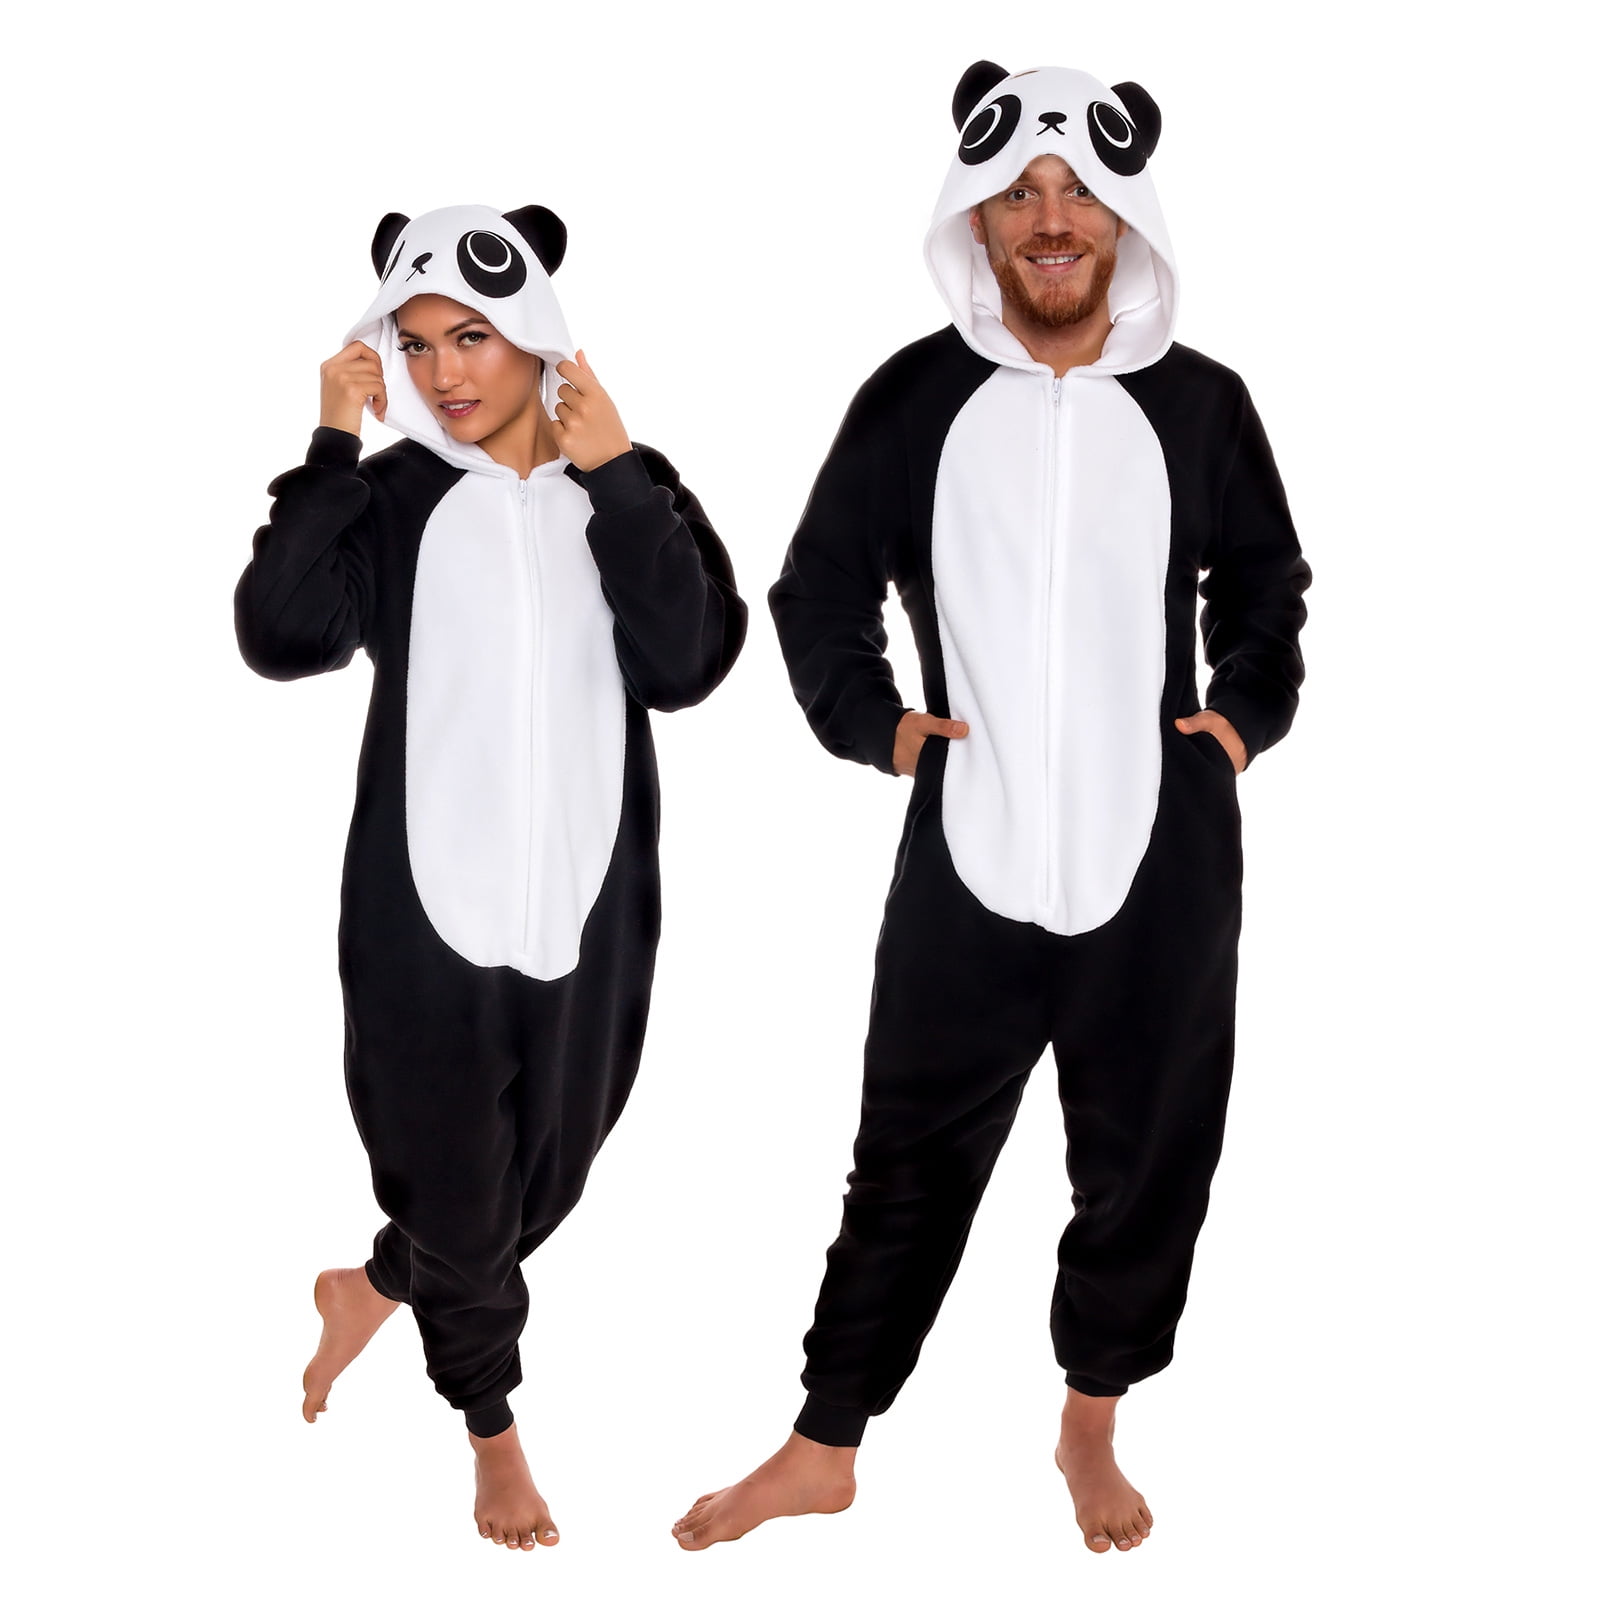 Slim Fit Panda One - Plush Adult Animal Jumpsuit by FUNZIEZ! (Black/White, Small) -